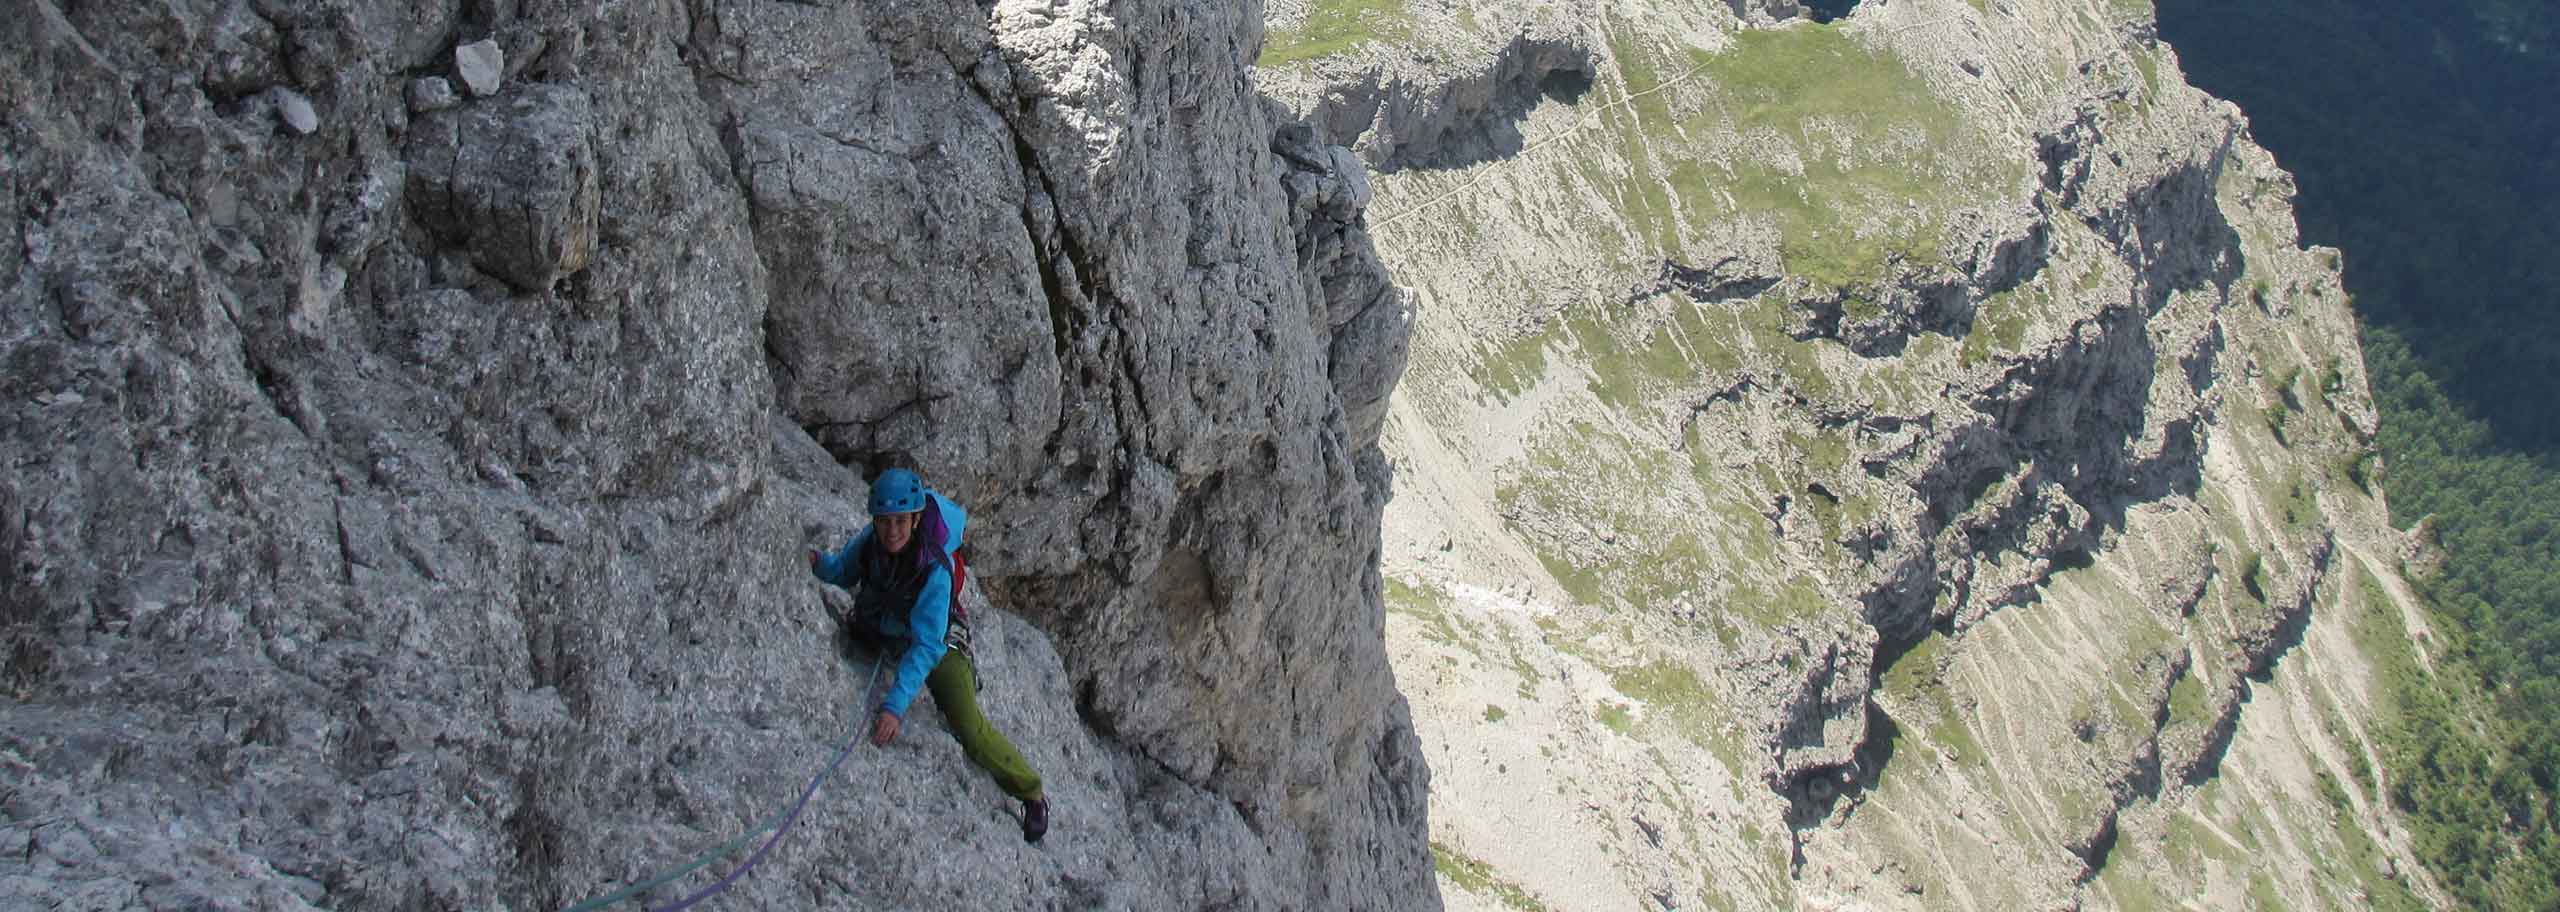 Rock Climbing in San Martino di Castrozza, Classic and Sport Climbing